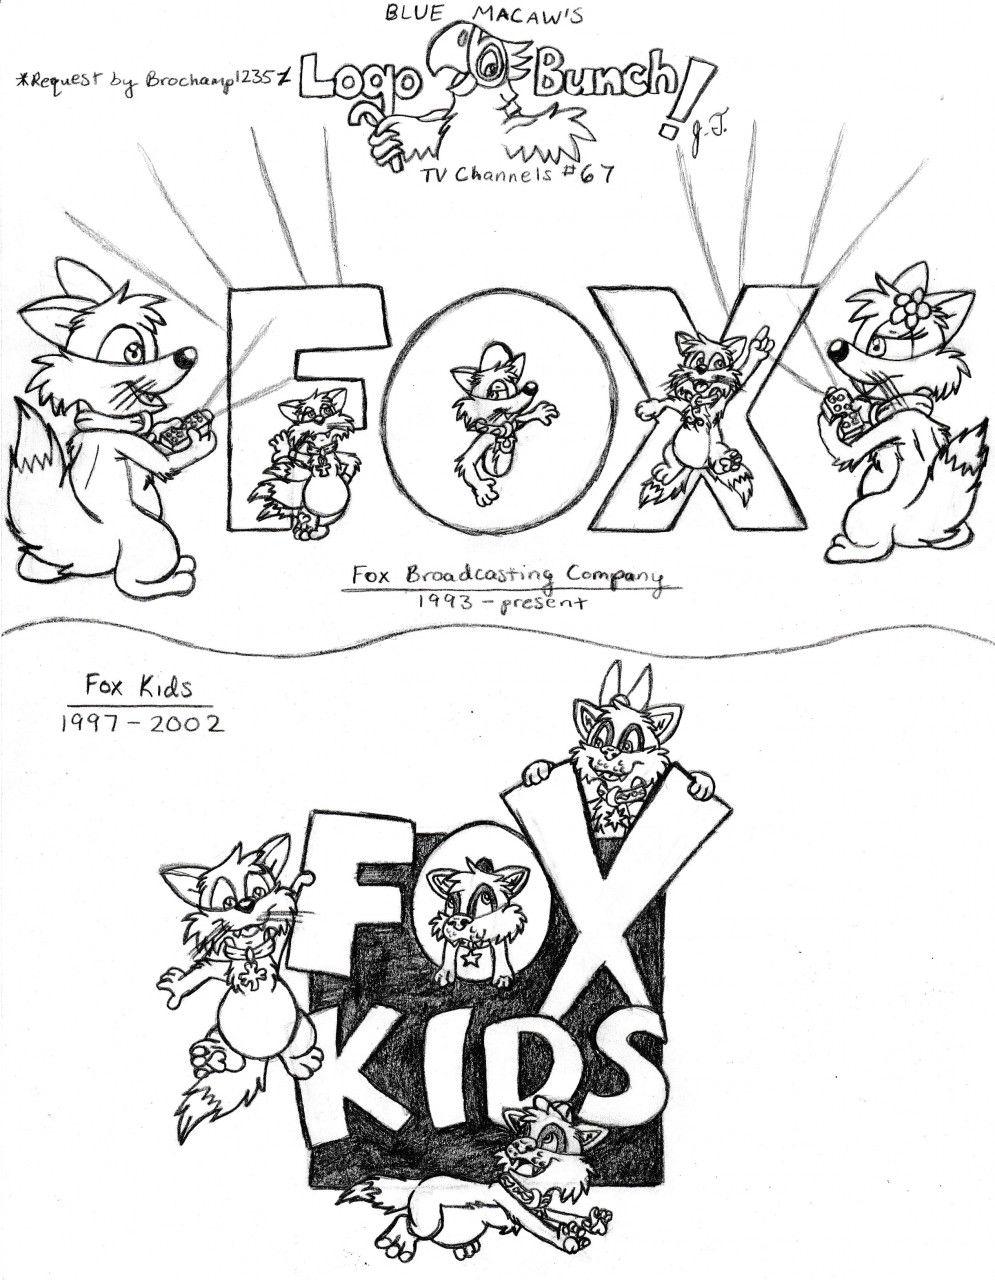 Fox Kids Logo - Blue Macaw's Logo Bunch #153 - TV ...